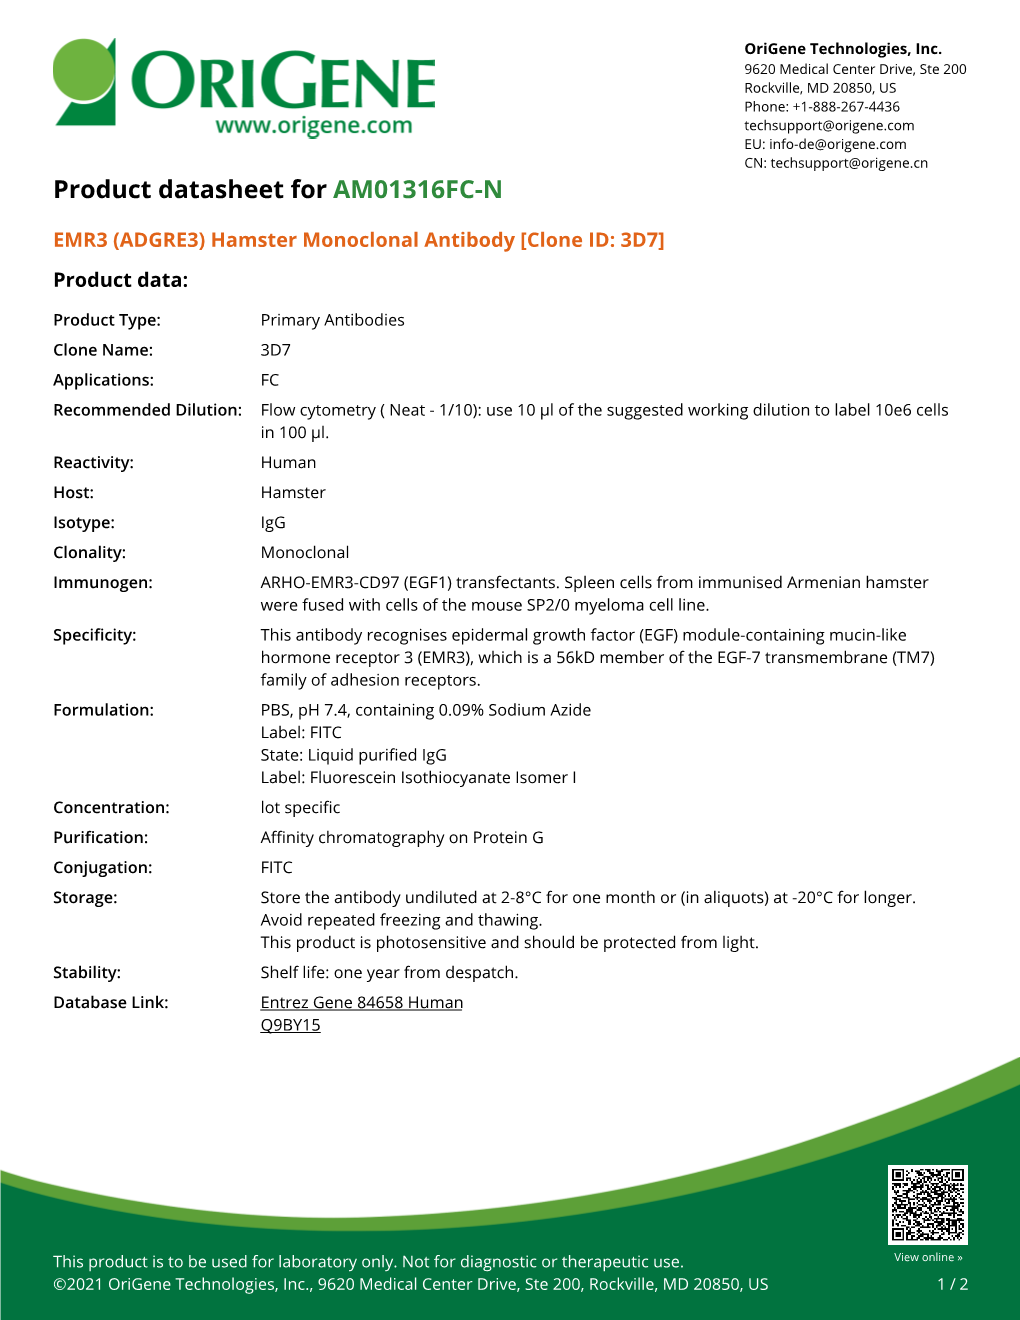 EMR3 (ADGRE3) Hamster Monoclonal Antibody [Clone ID: 3D7] Product Data